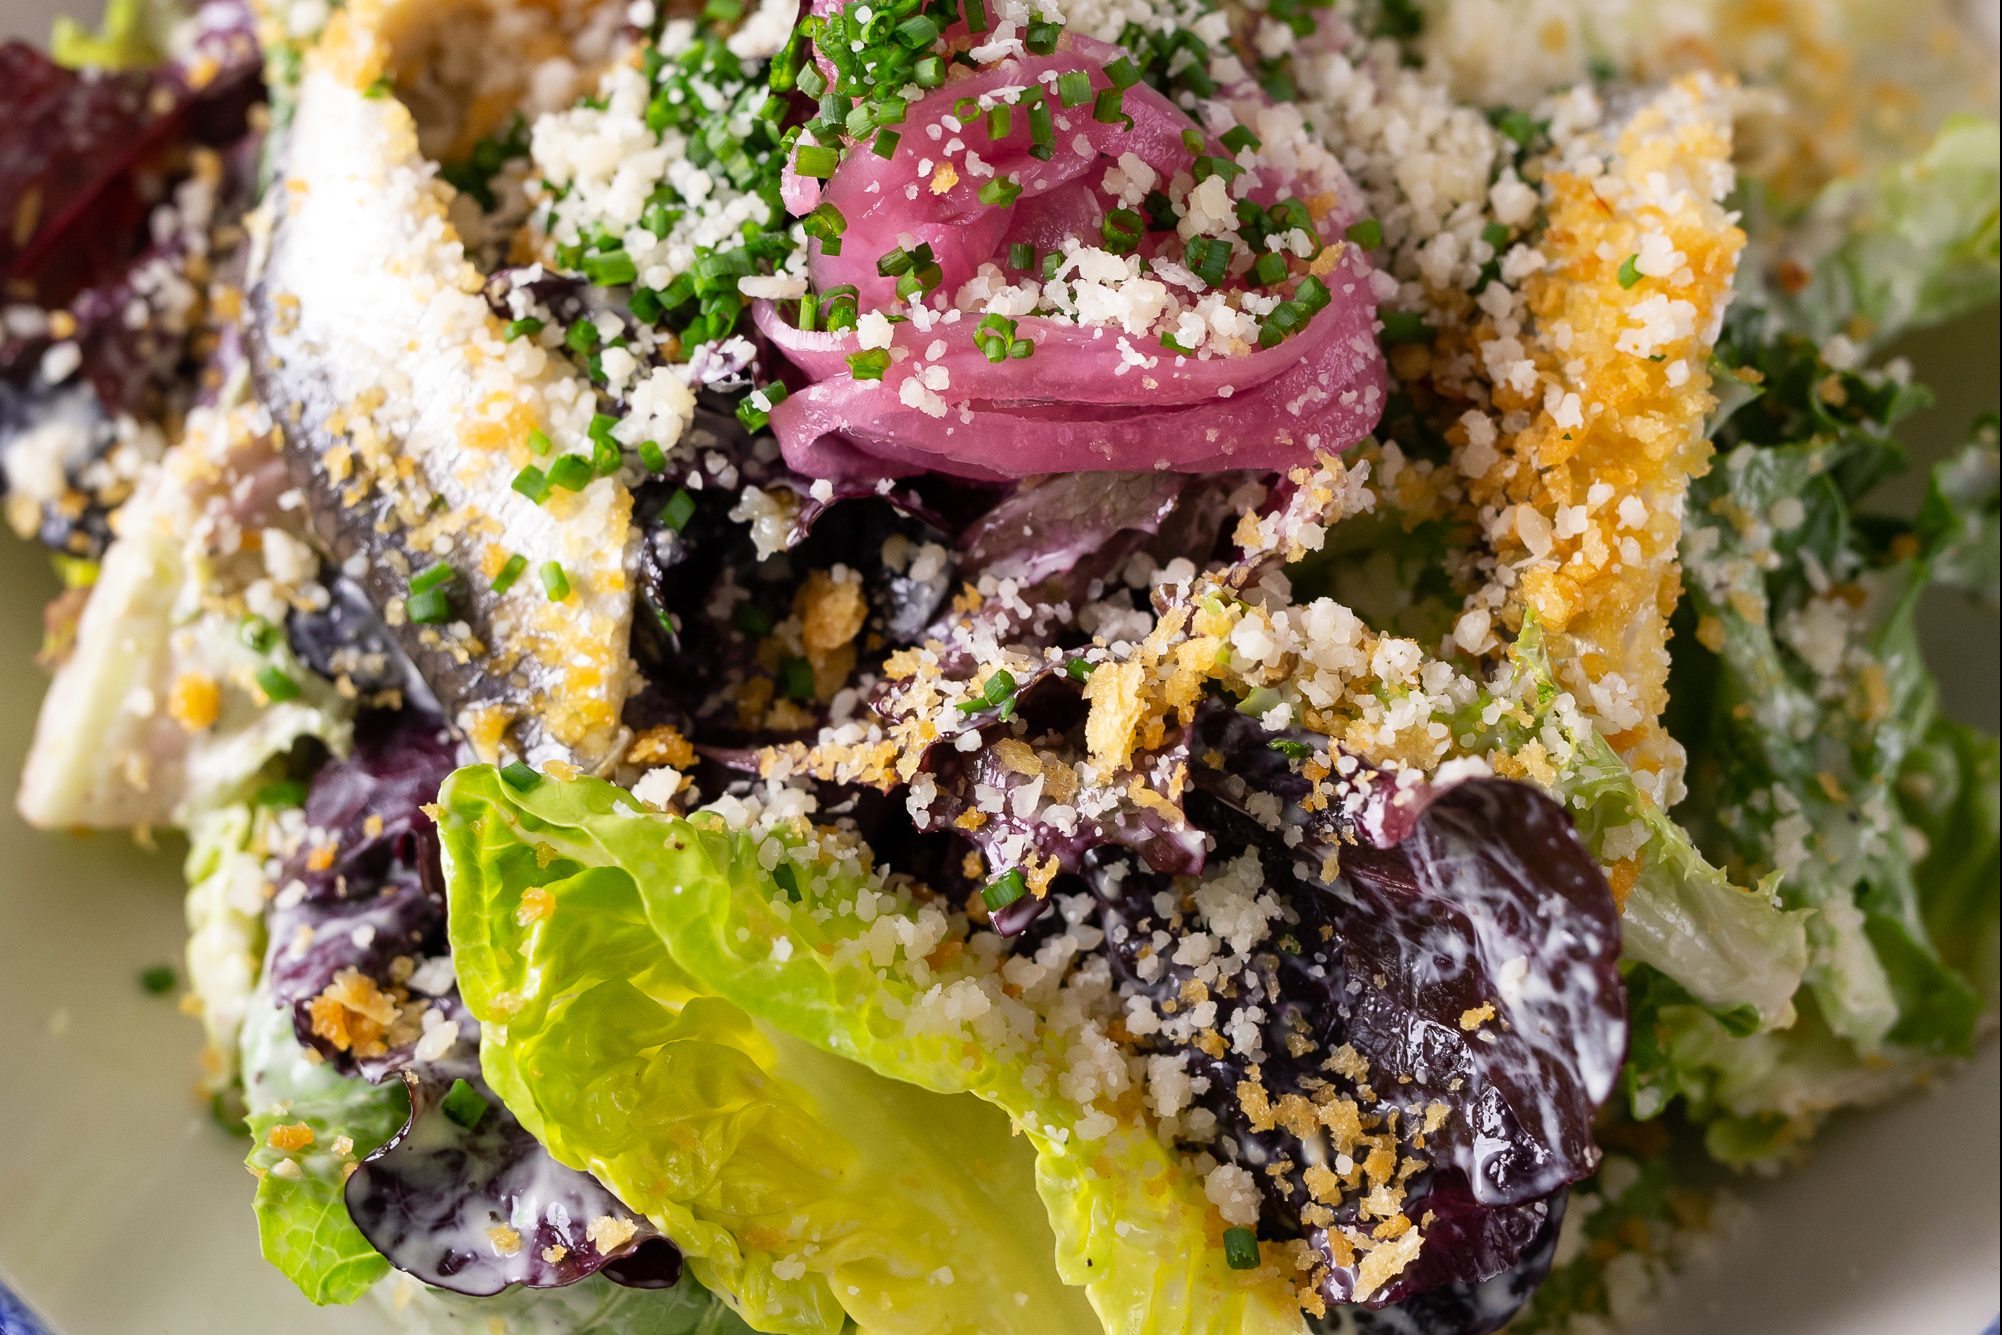 Caesar salad is a sneaky comfort food that's full of flavor.